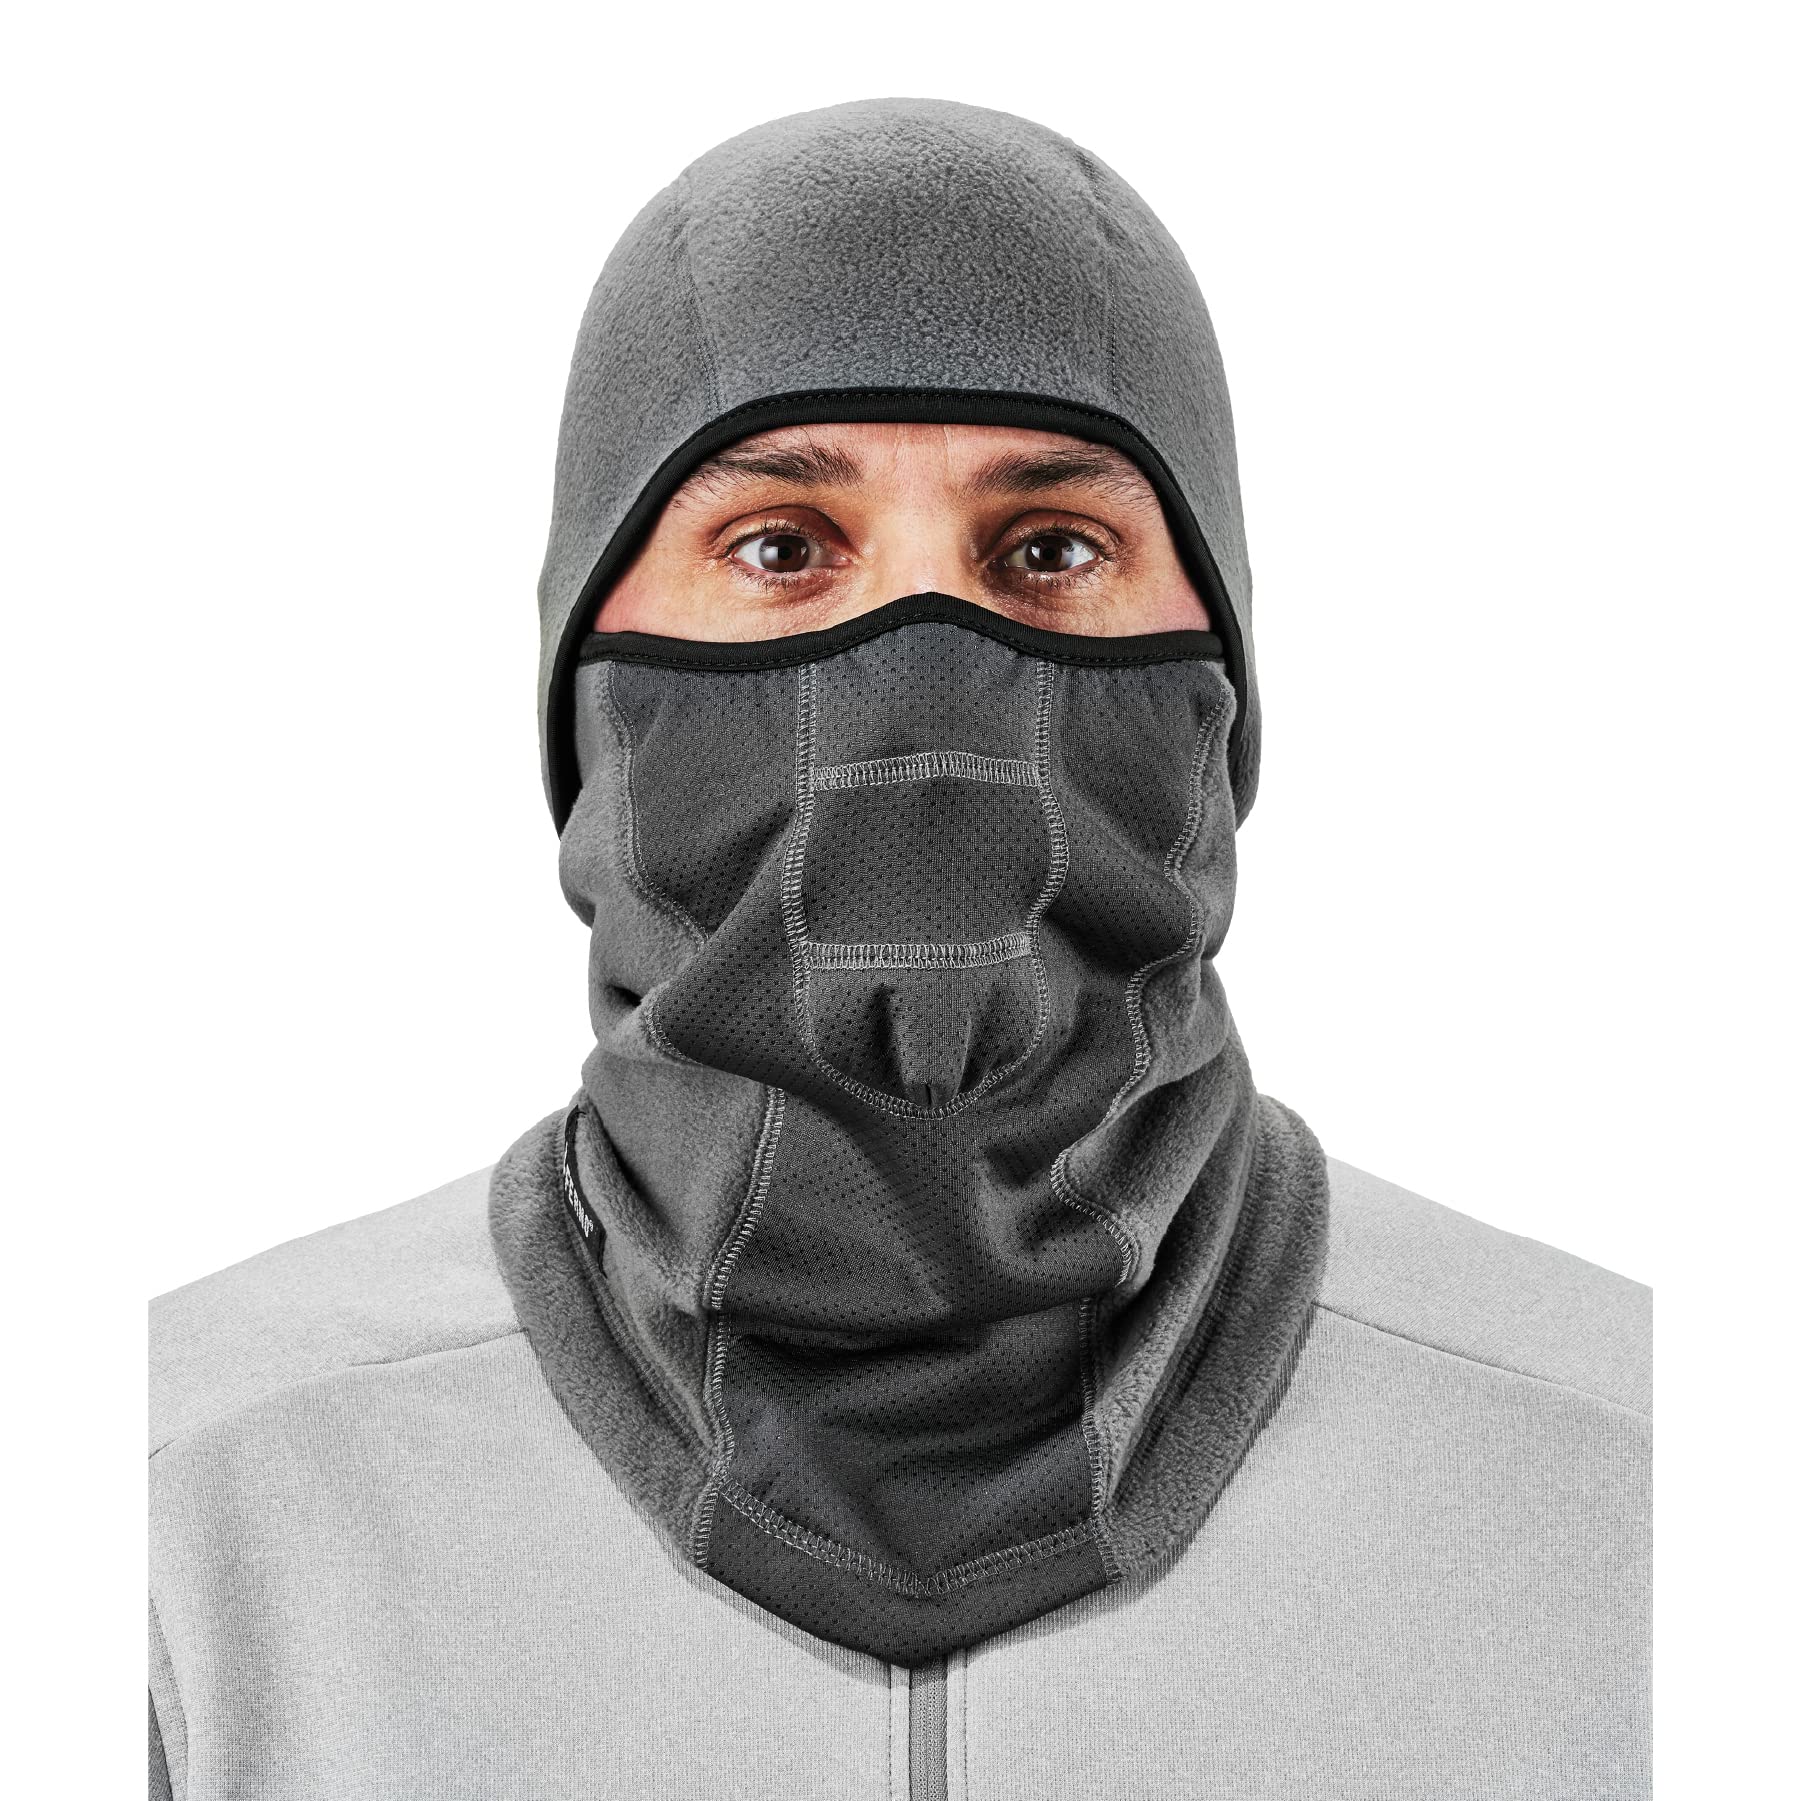 Ergodyne N-Ferno Wind-Resistant Hinged Design Balaclava Ski Mask (Gray) $4.07 + Free Shipping w/ Prime or on $25+